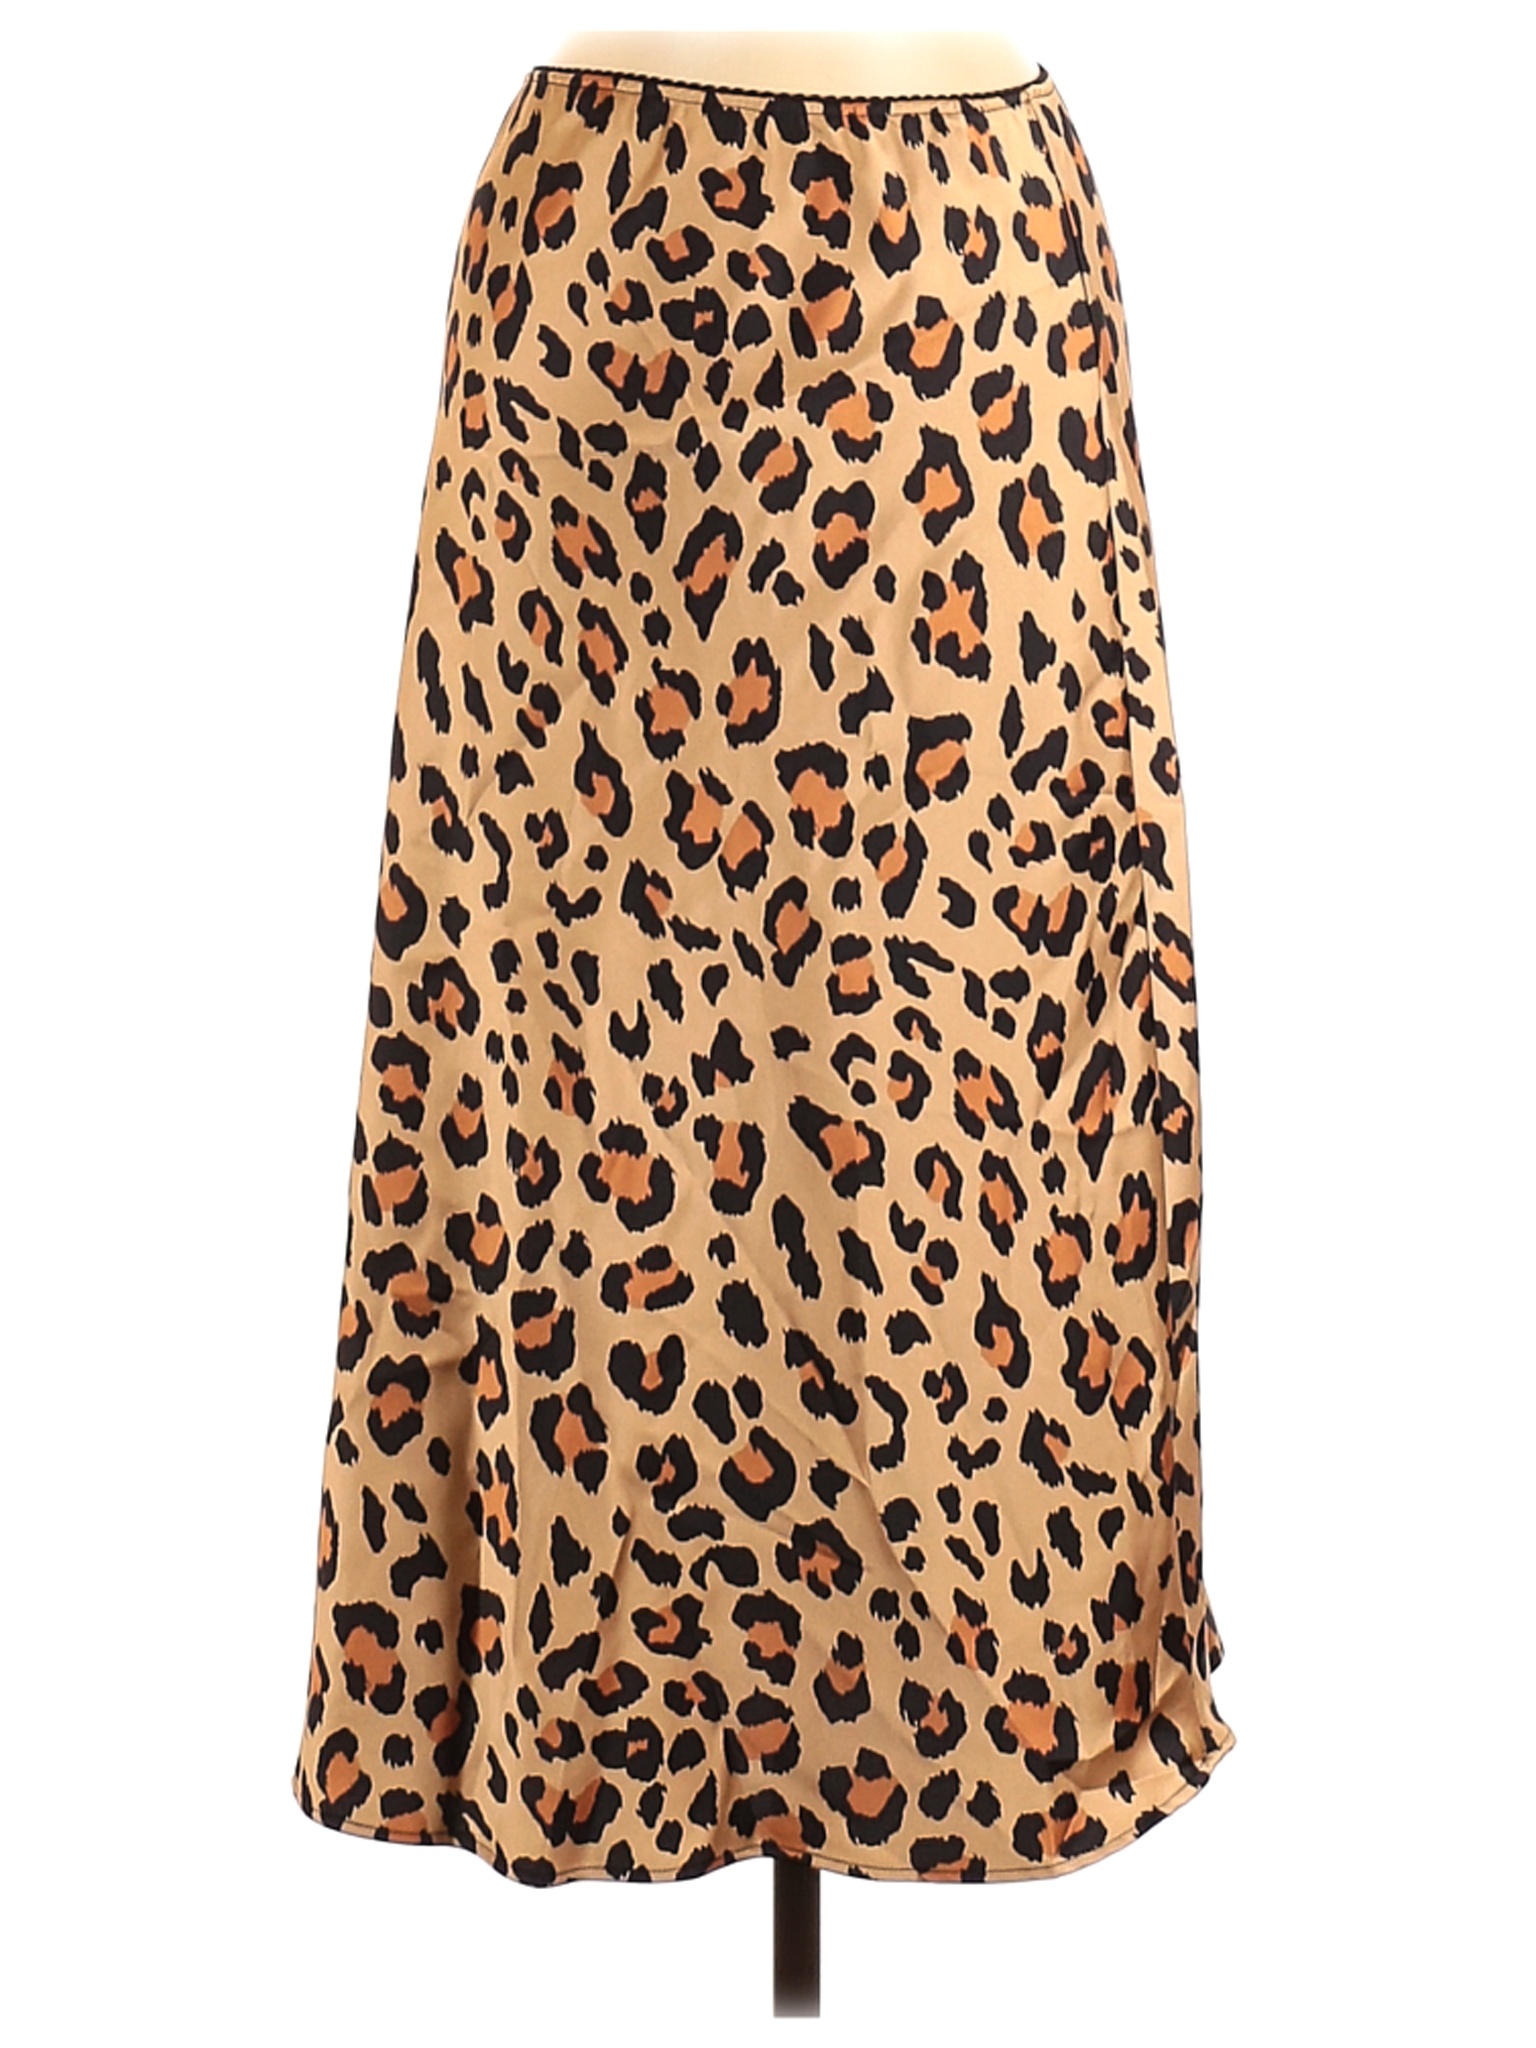 NWT Peyton Jensen Women Yellow Casual Skirt M | eBay